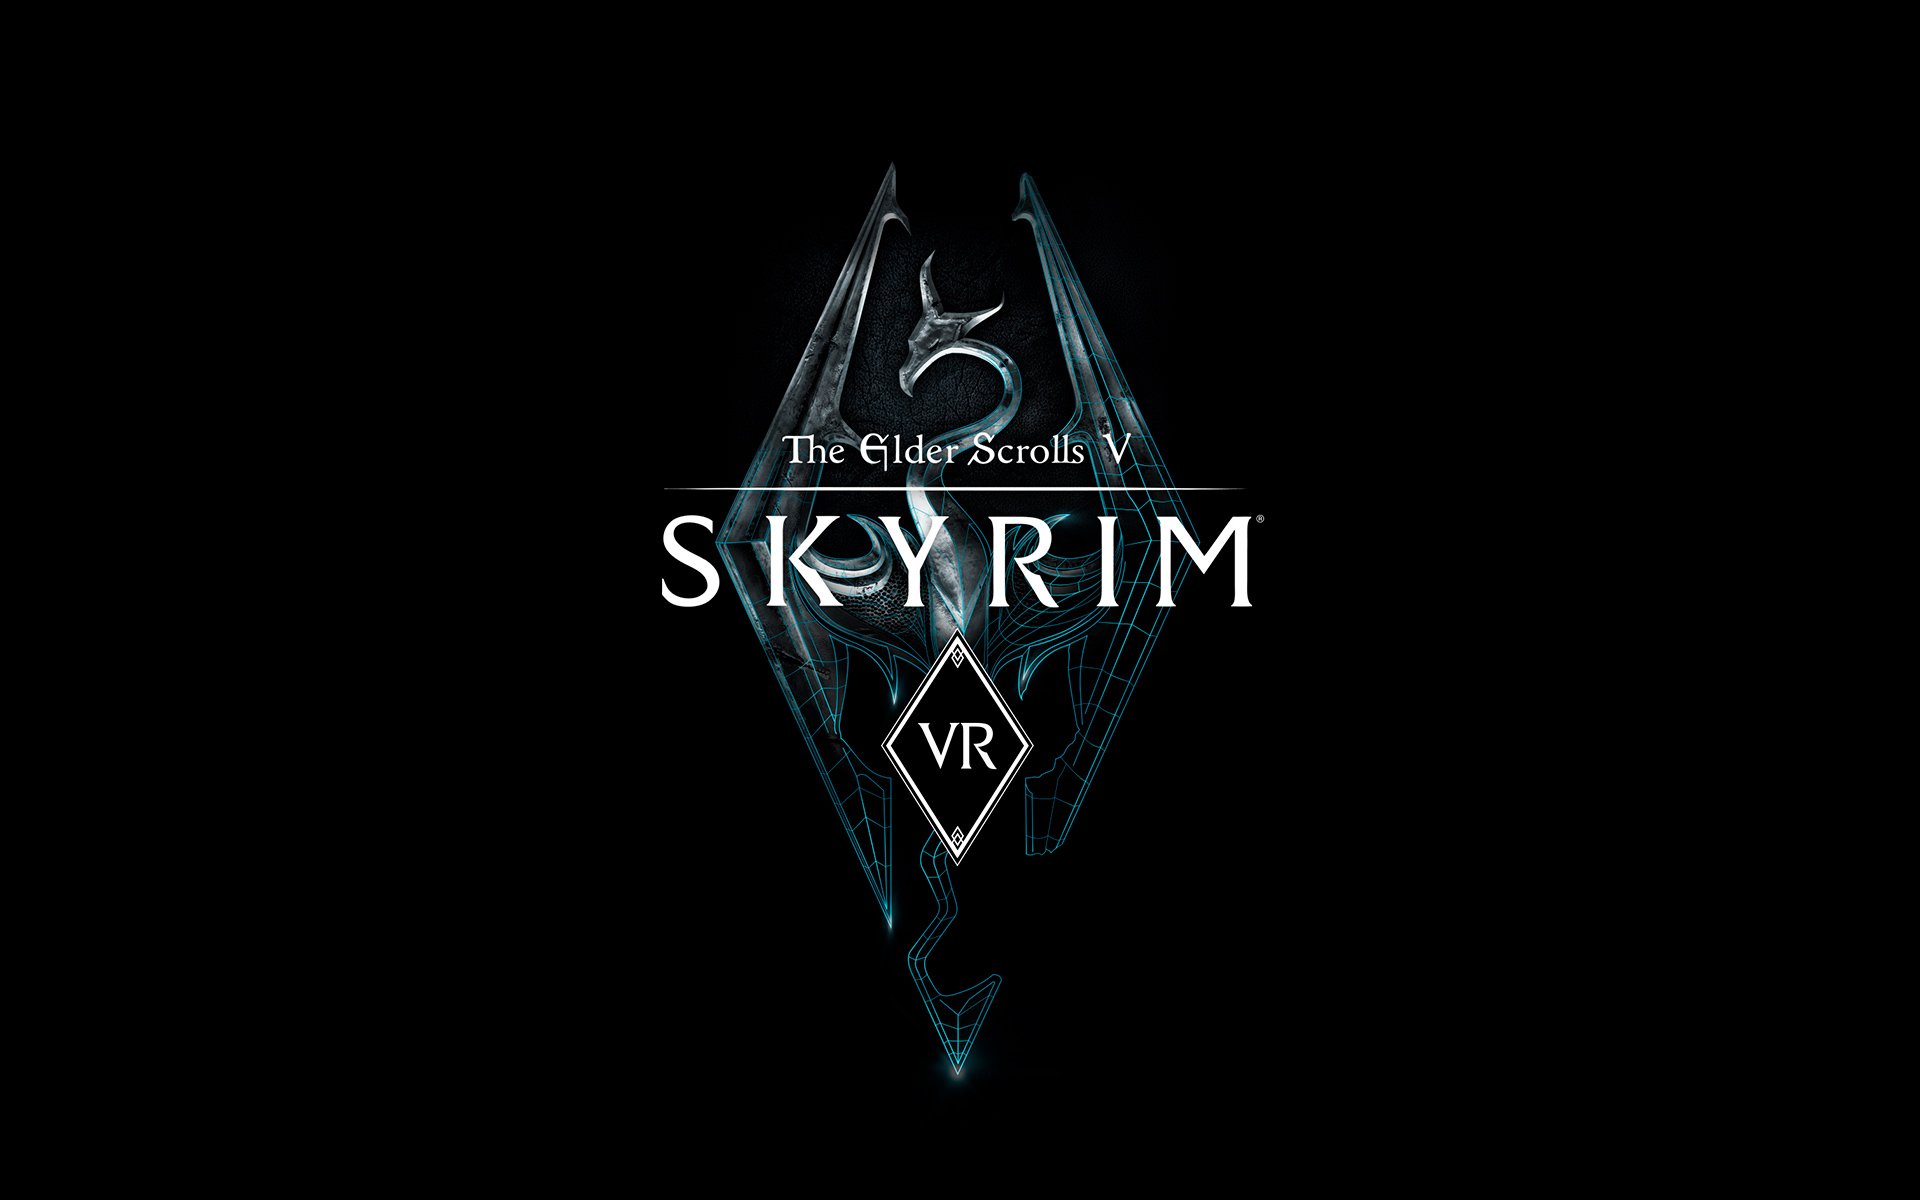 The Elder Scrolls V: Skyrim VR por R$ 149.99